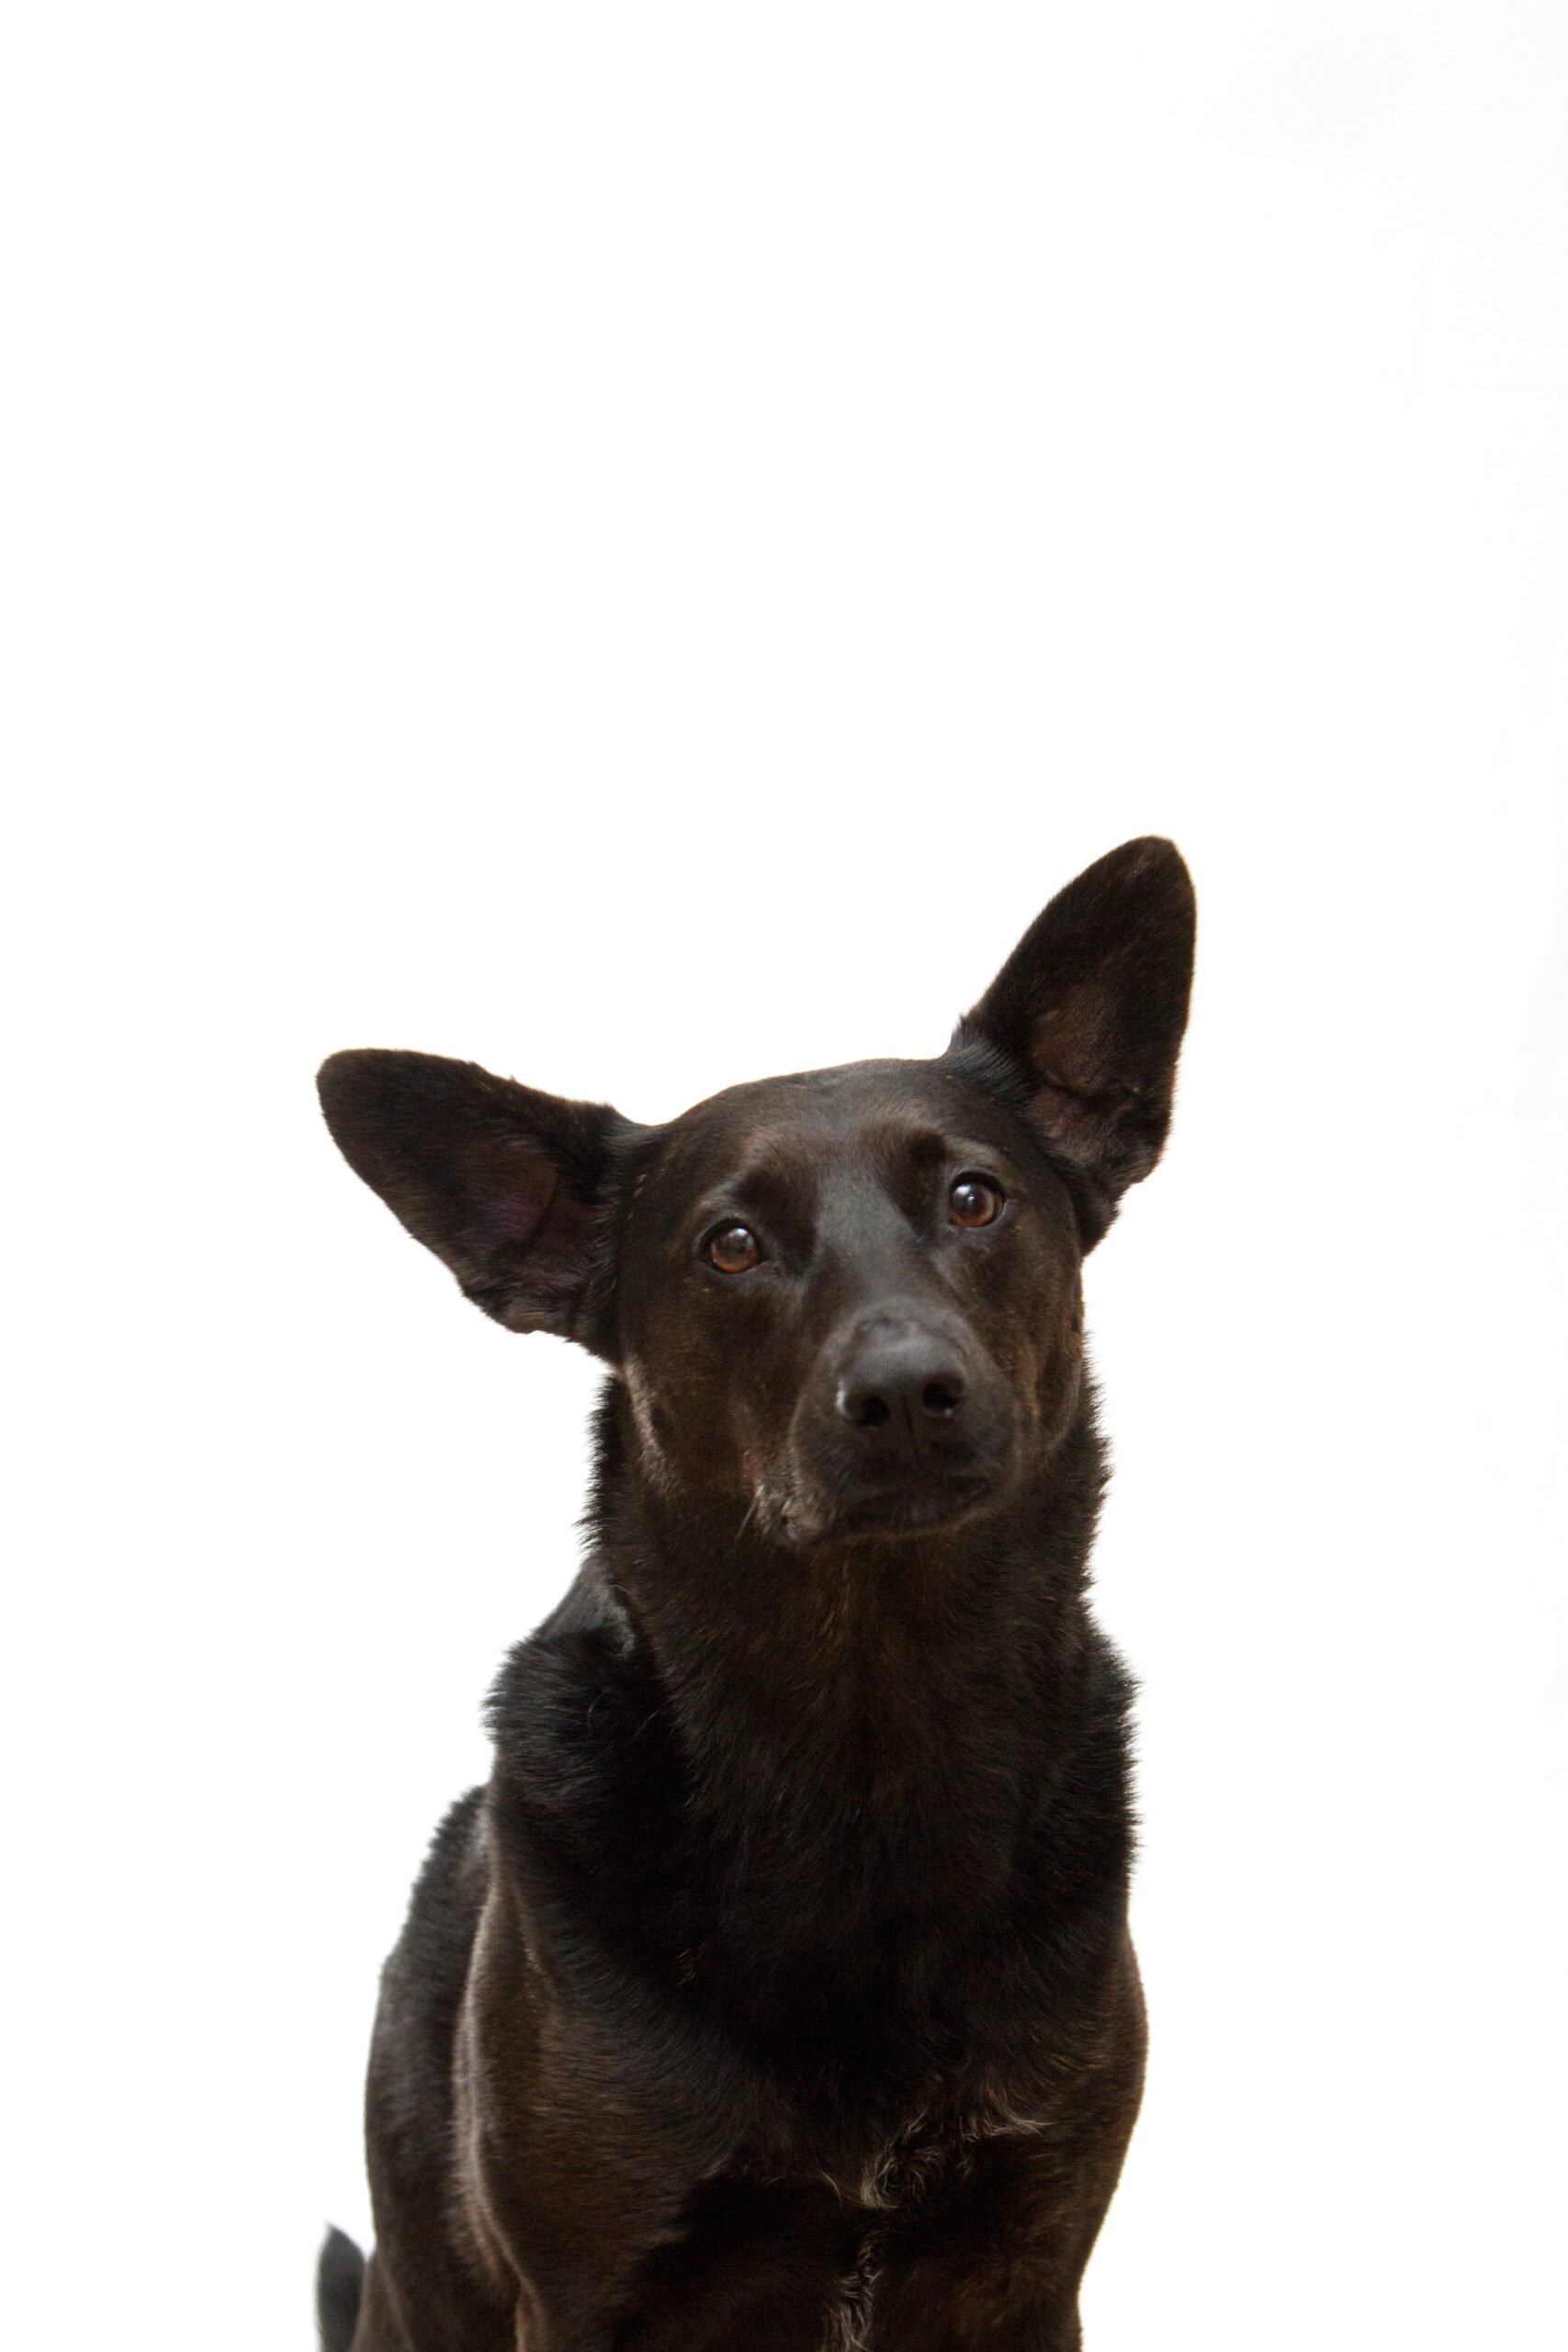 david-lezcano-m-Doa-Black dog with ears uprightunsplash (1)